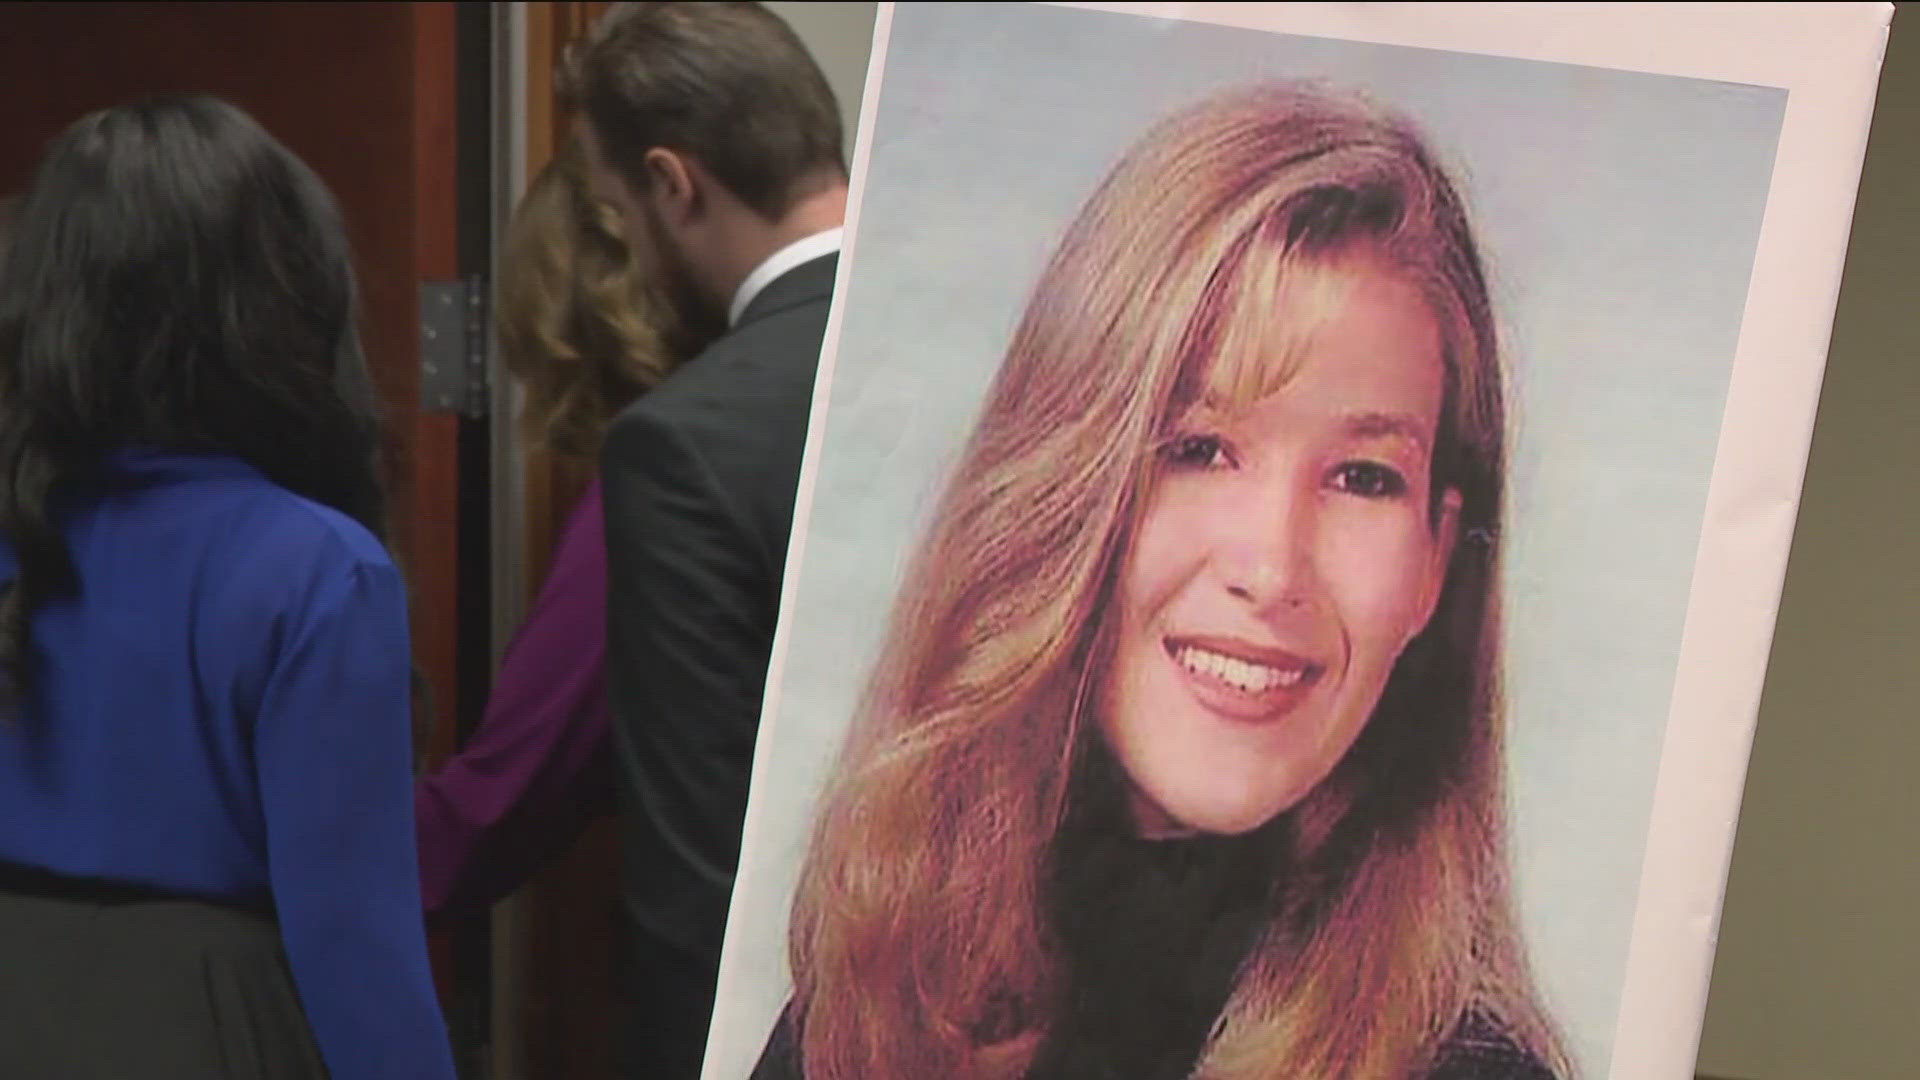 Tara Baker, a law school student at UGA, was killed in 2001